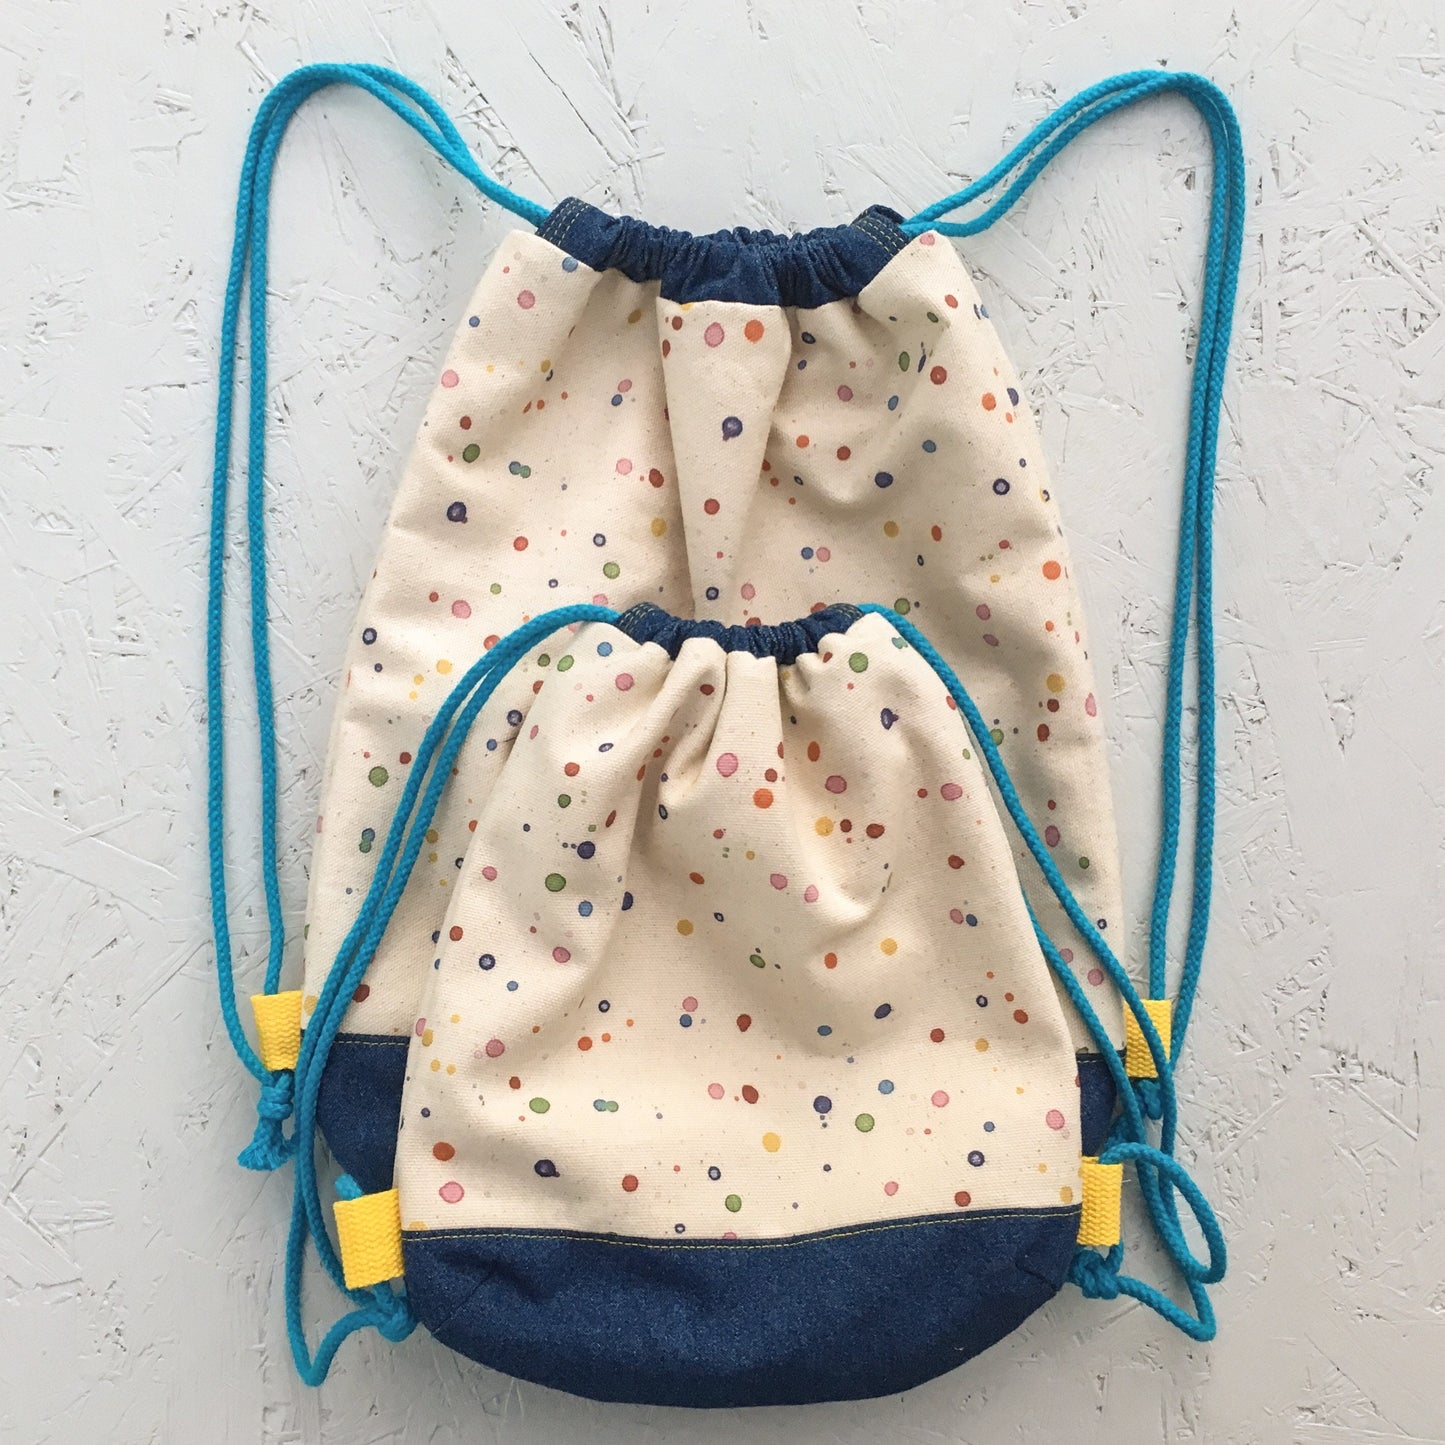 Child's drawstring backpack/bag